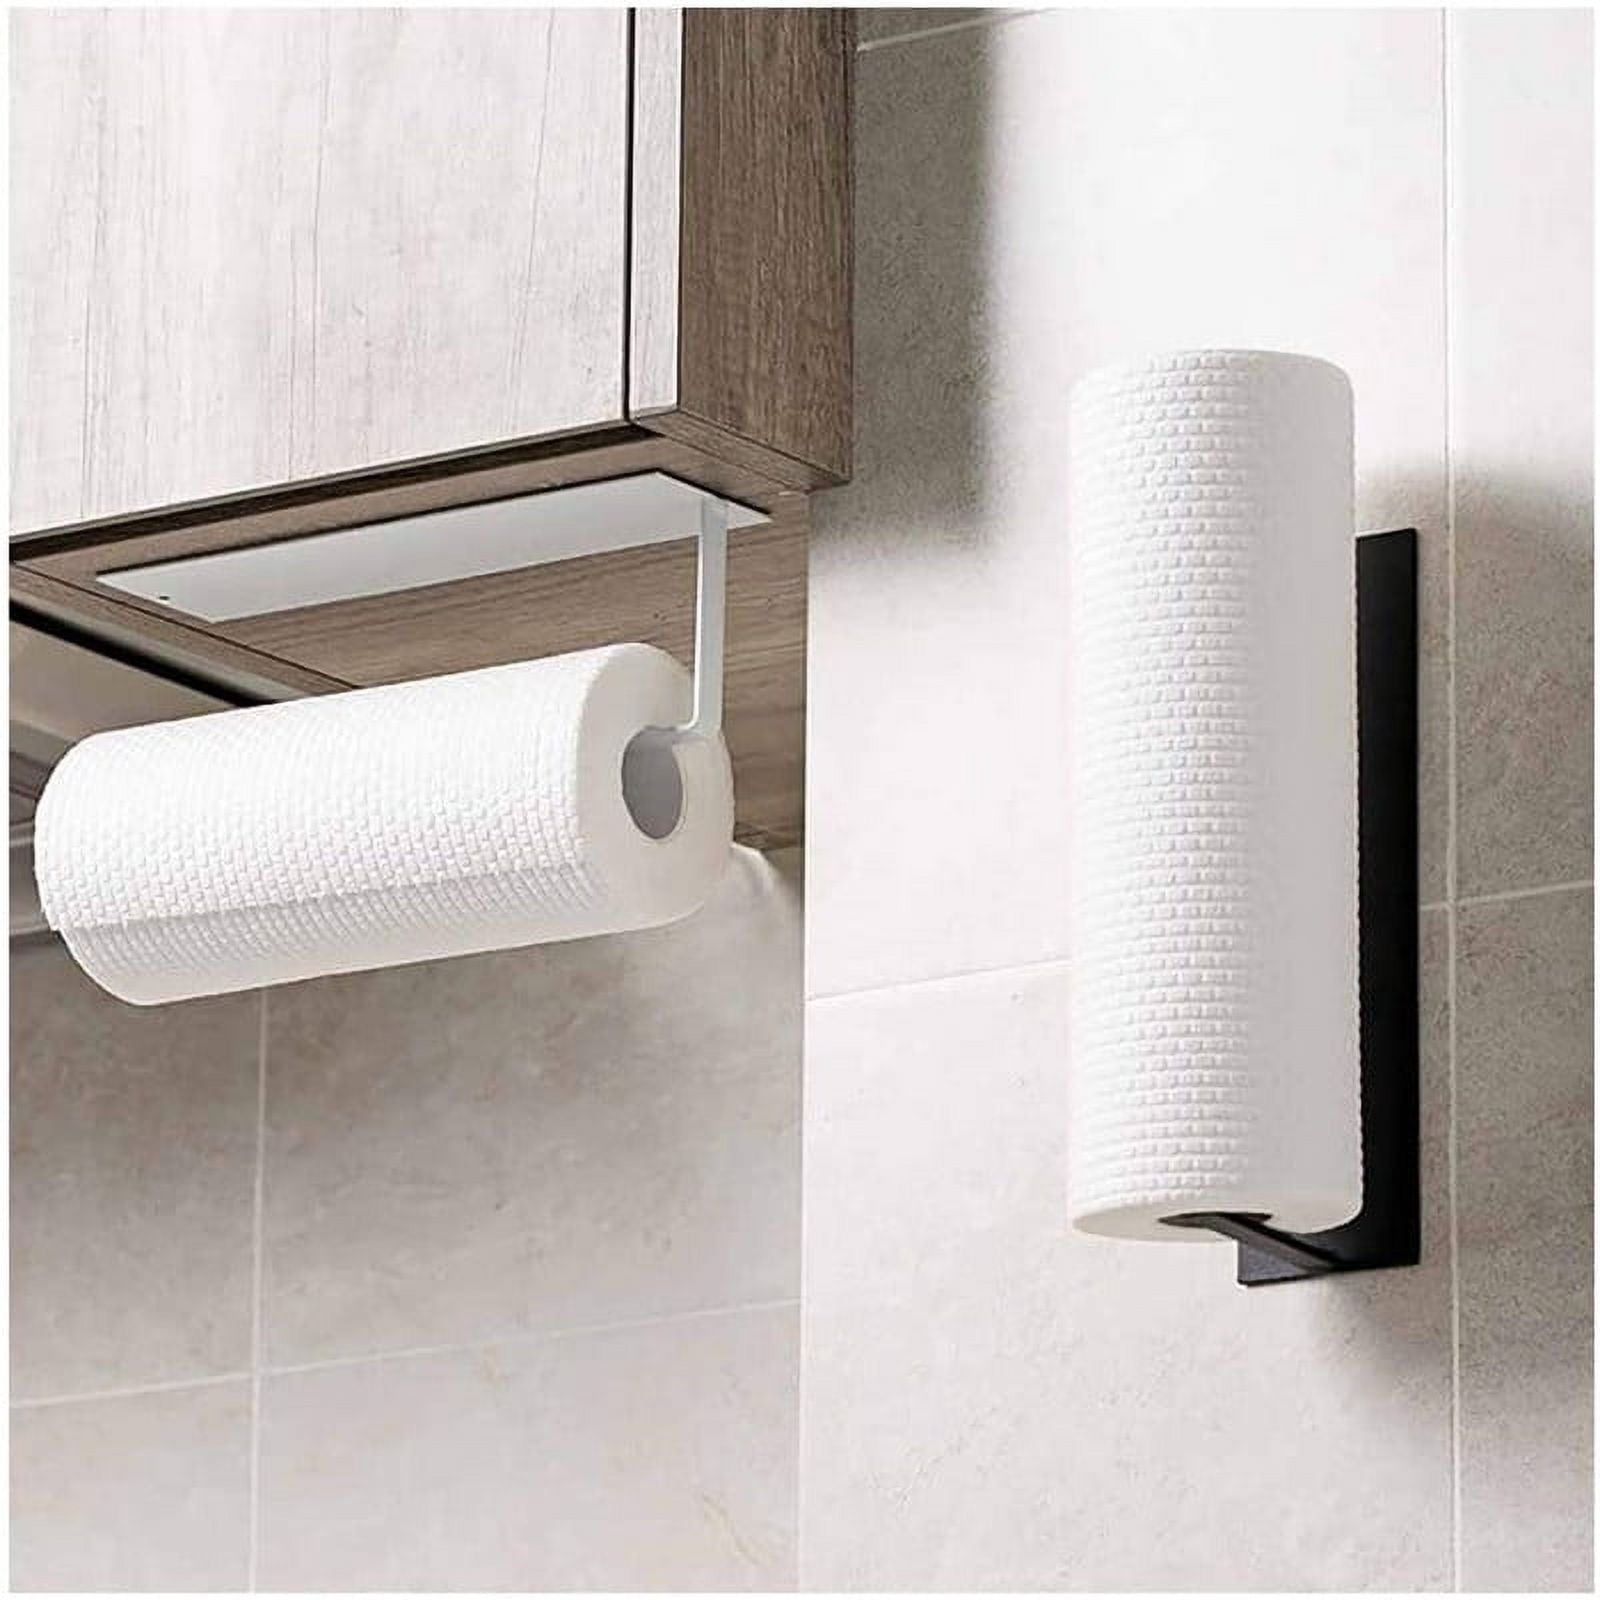 Self-Adhesive Paper Towel Holders For Bathroom Kitchen Tissue Holder  Hanging Toilet Paper Holder Roll Paper Holder Under Cabinet Towel Rack  Stand Home